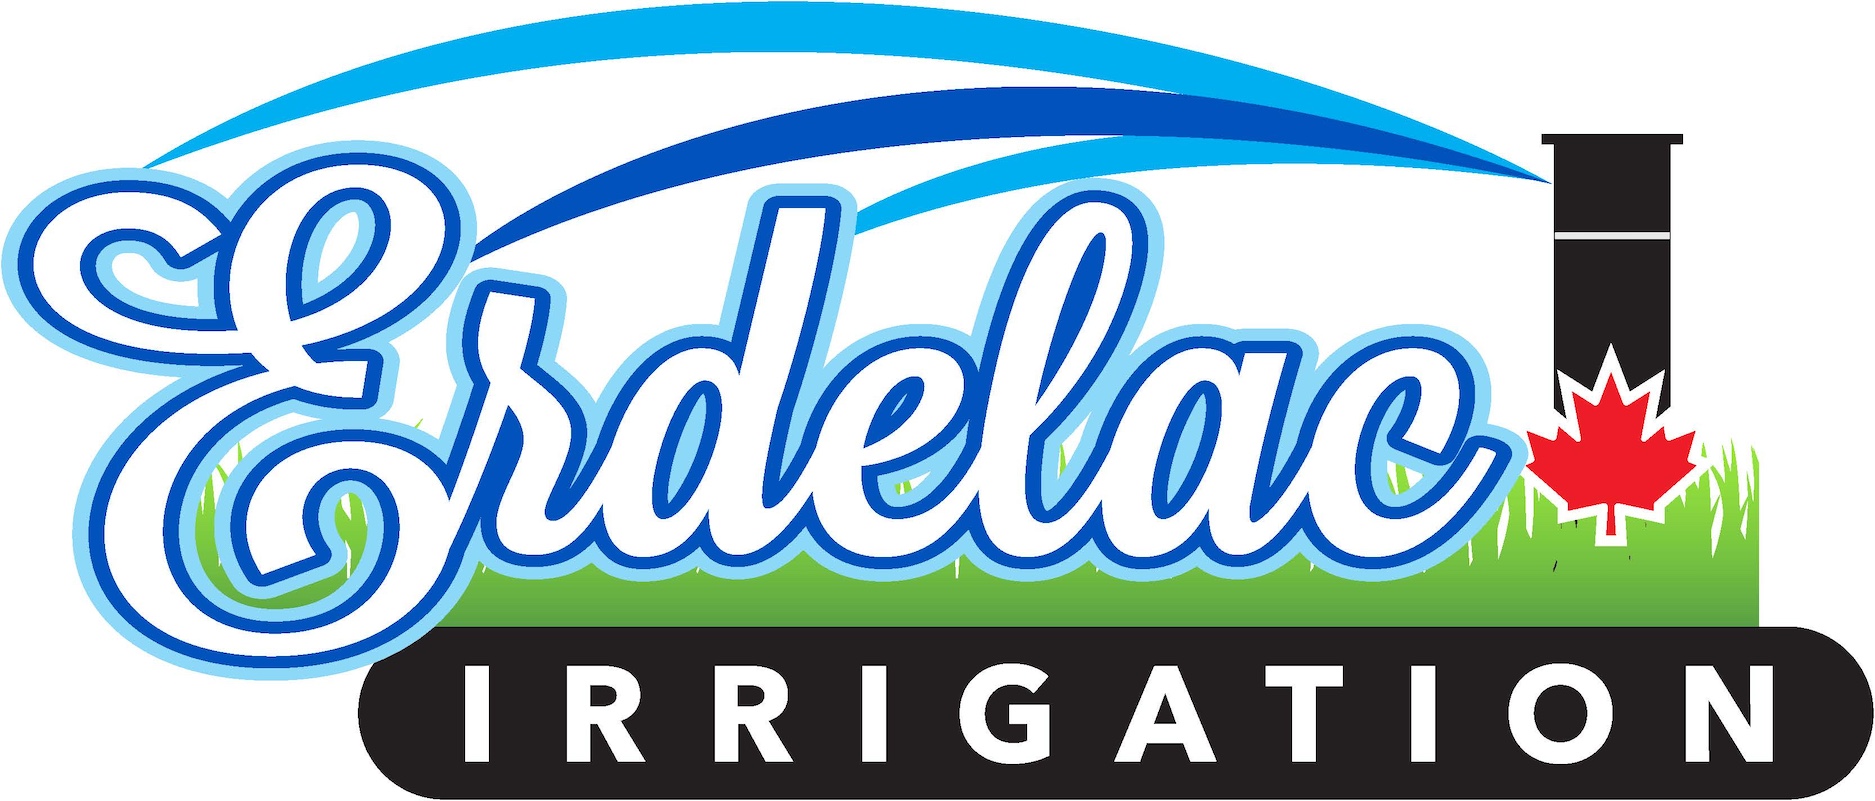 Erdelac Irrigation